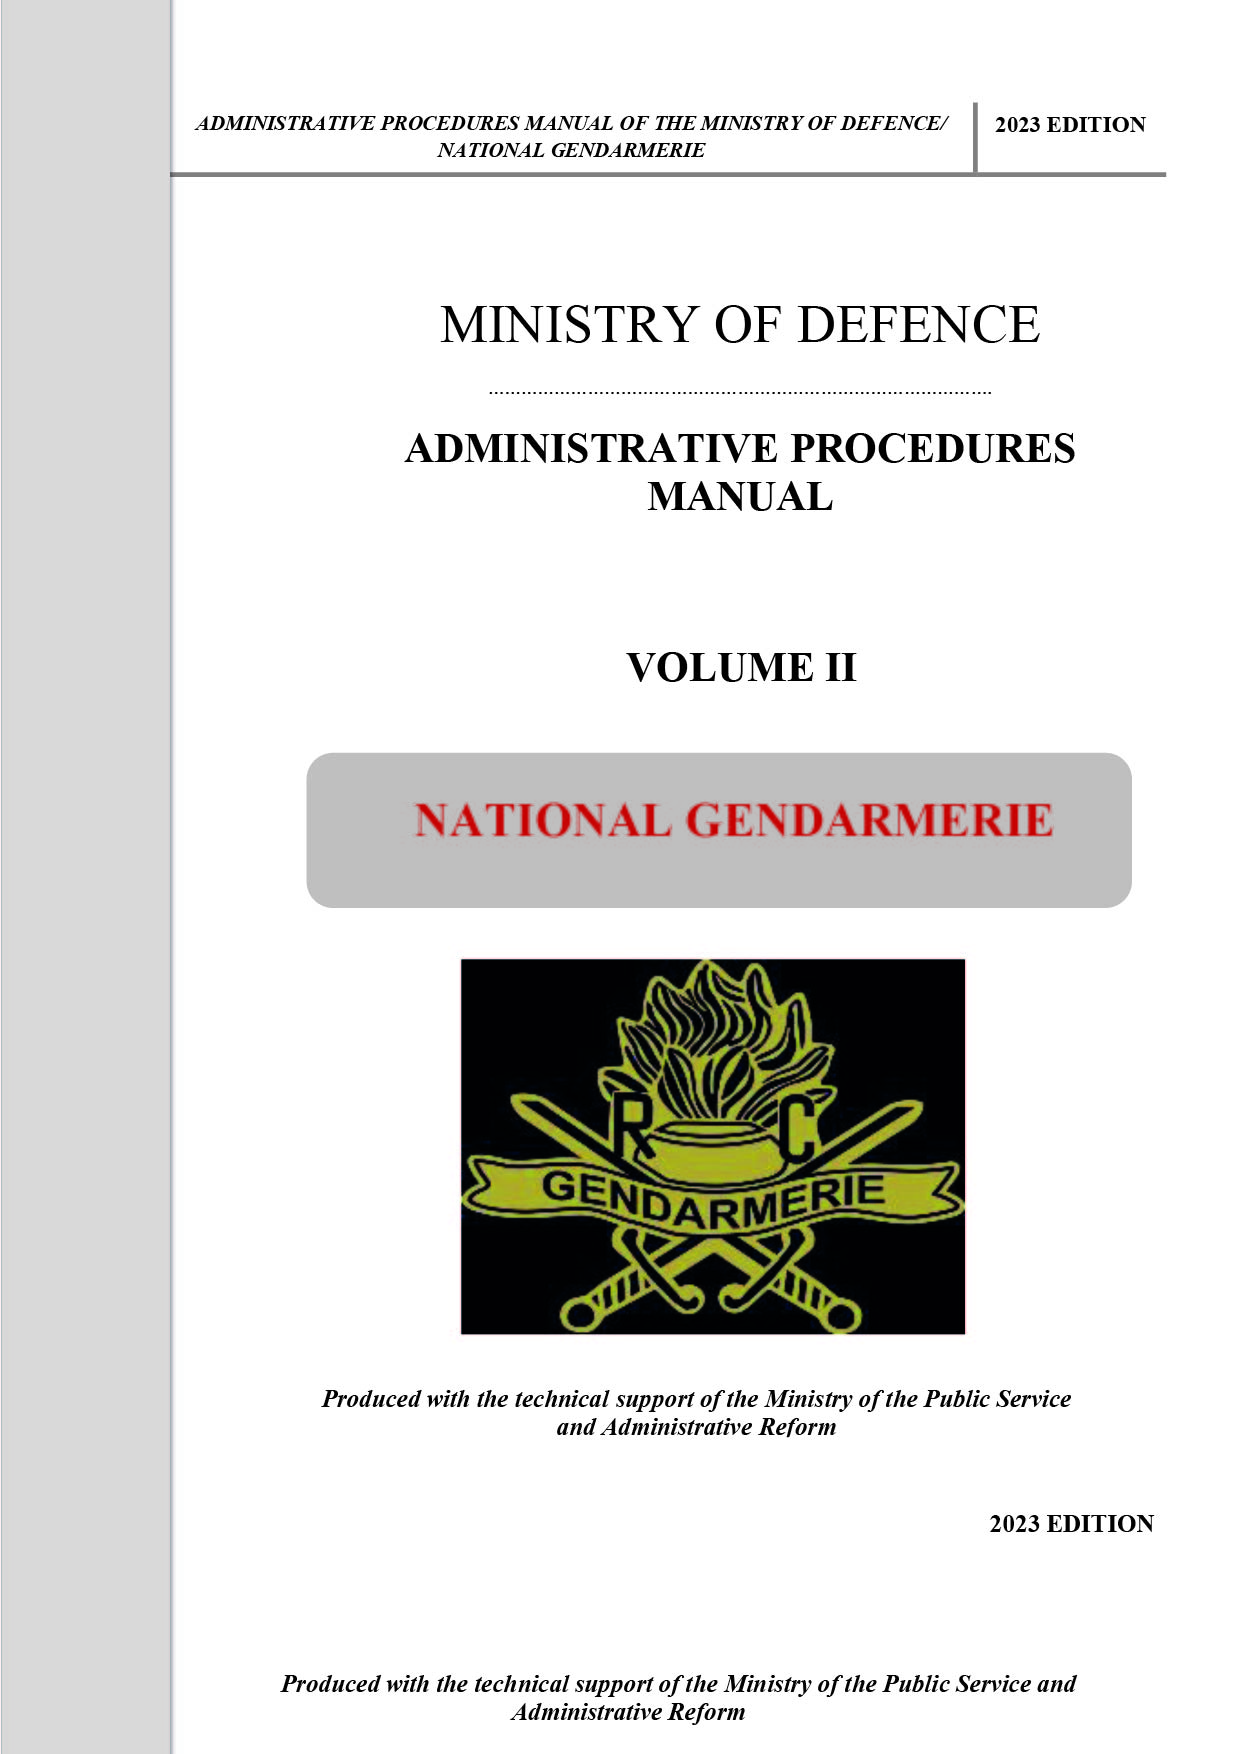 ADMINISTRATIVE PROCEDURES MANUAL NATIONAL GENDARMERIE VOLUME II